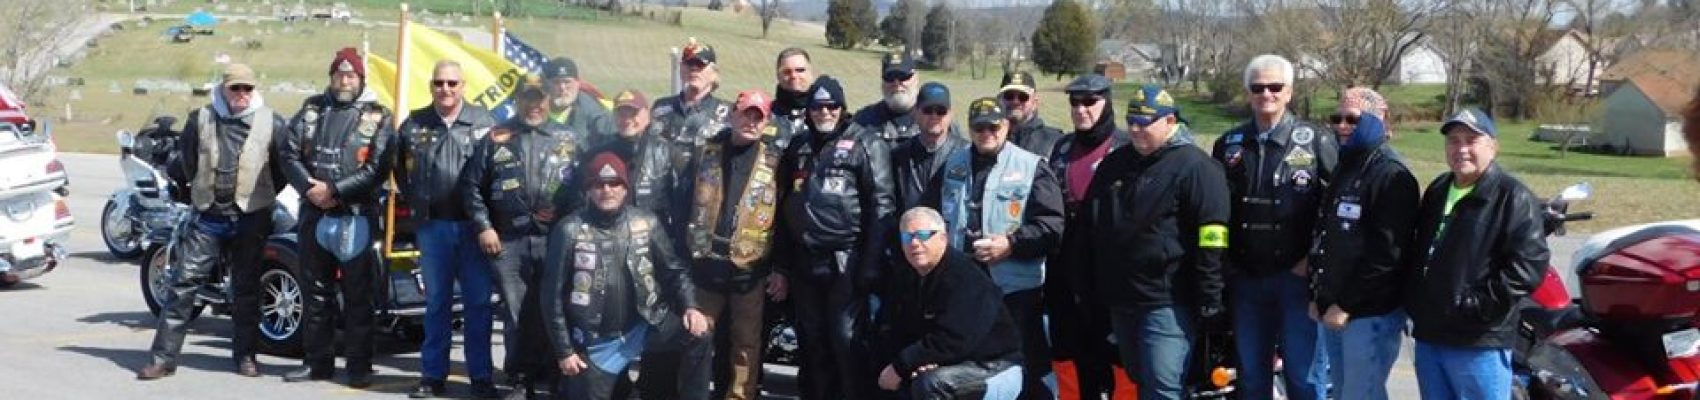 Kentucky Patriot Guard Riders